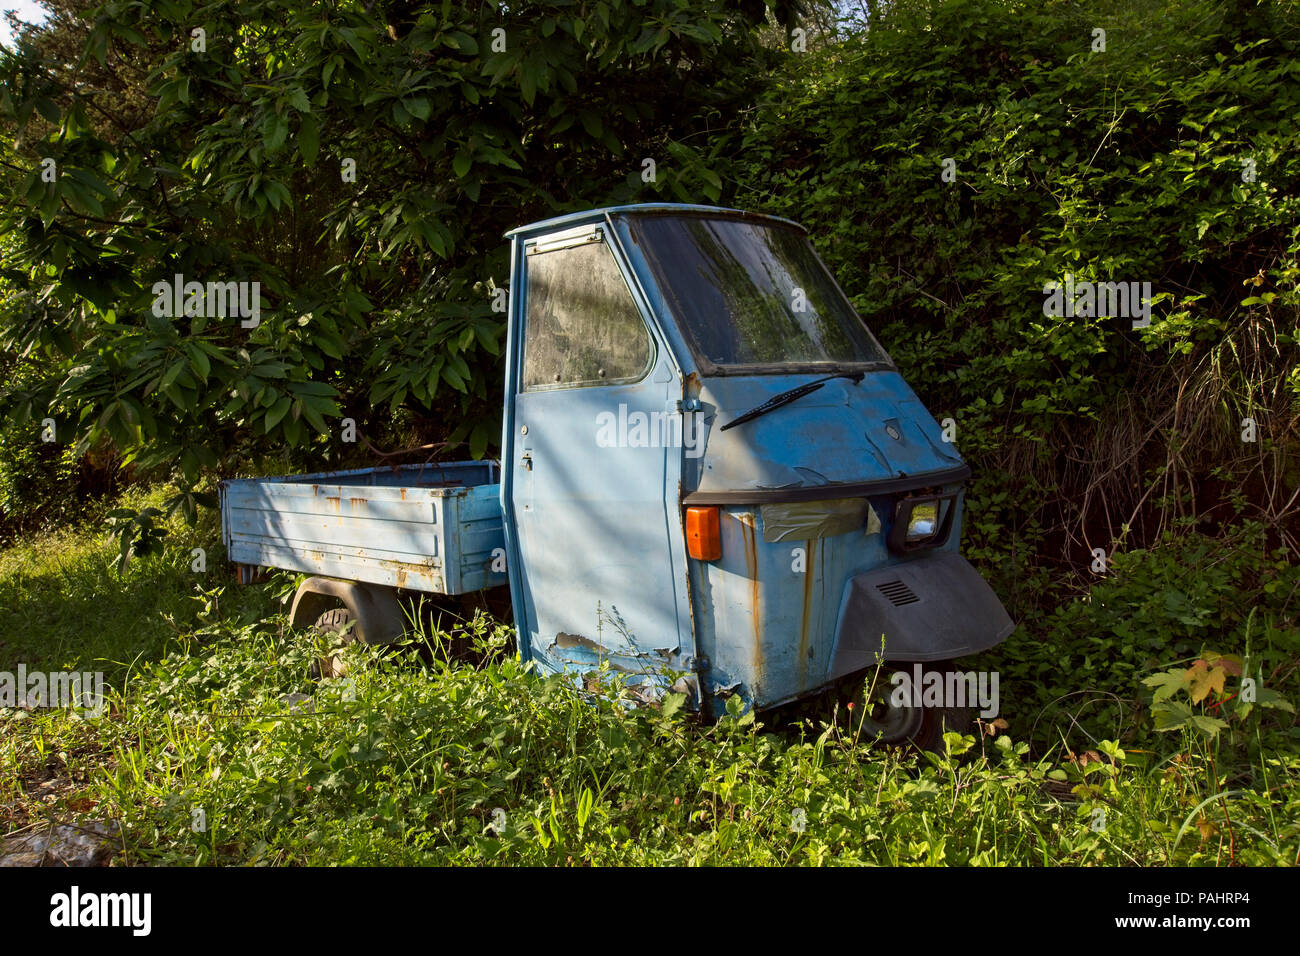 Profile of a Piaggio Elestart (Vespa) iconic Italian vehicle, now abandoned. Stock Photo